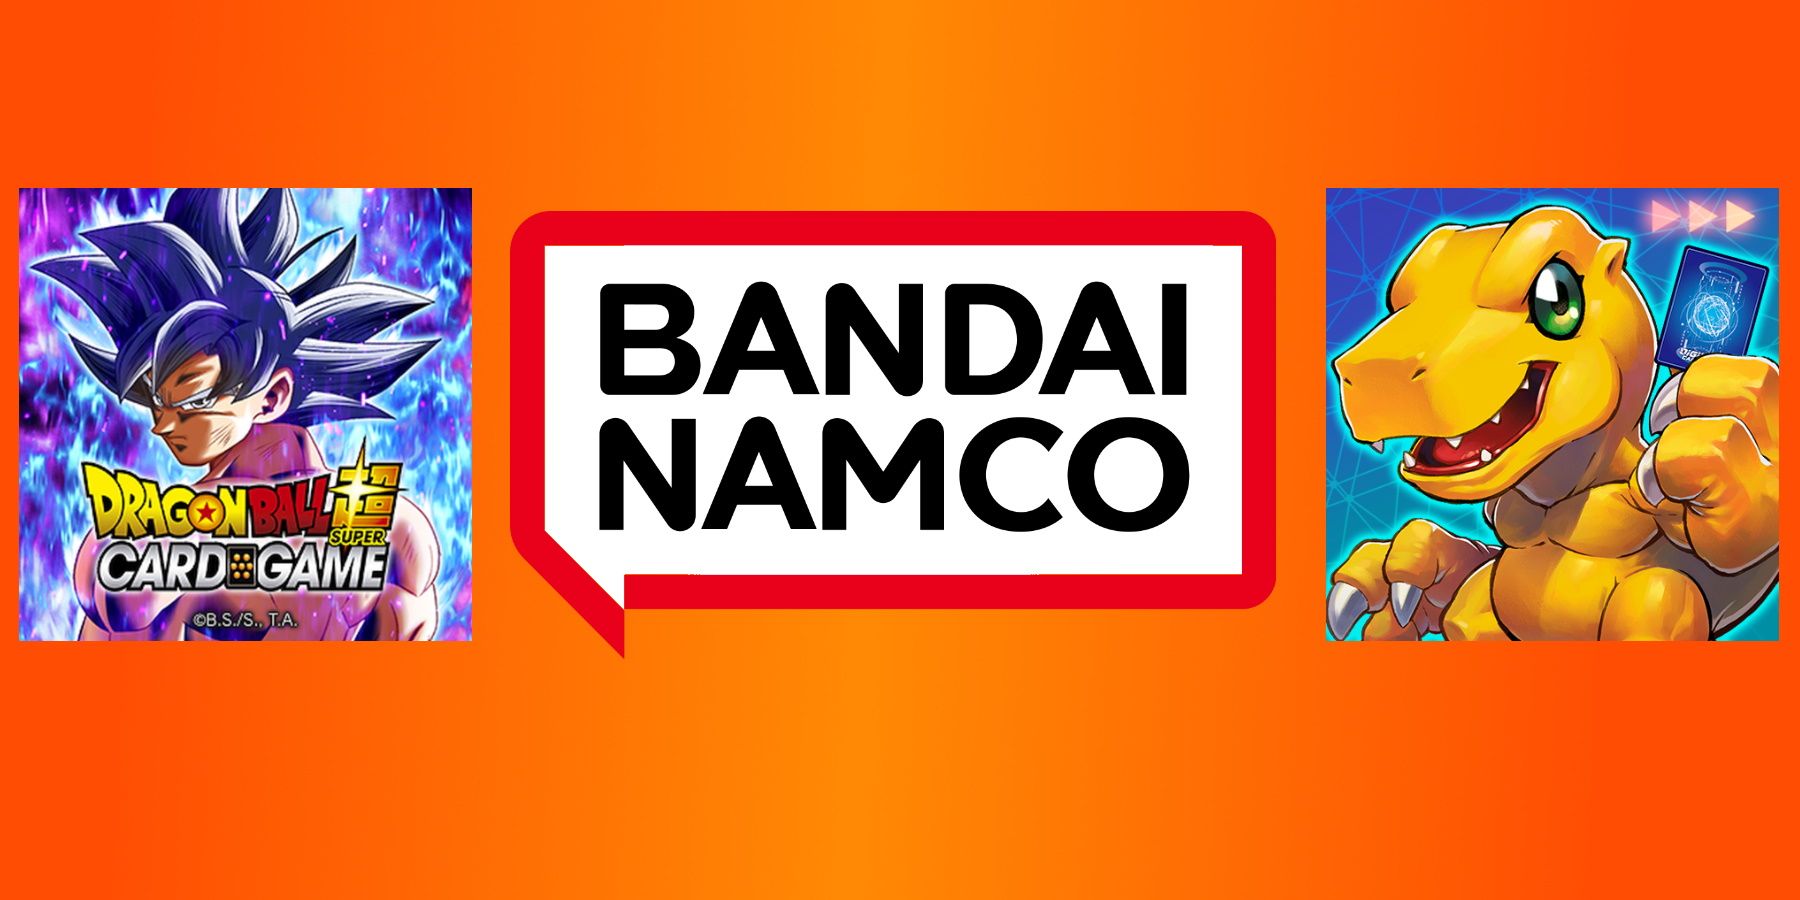 bandai-namco-digimon-dragon-ball-z-card-game